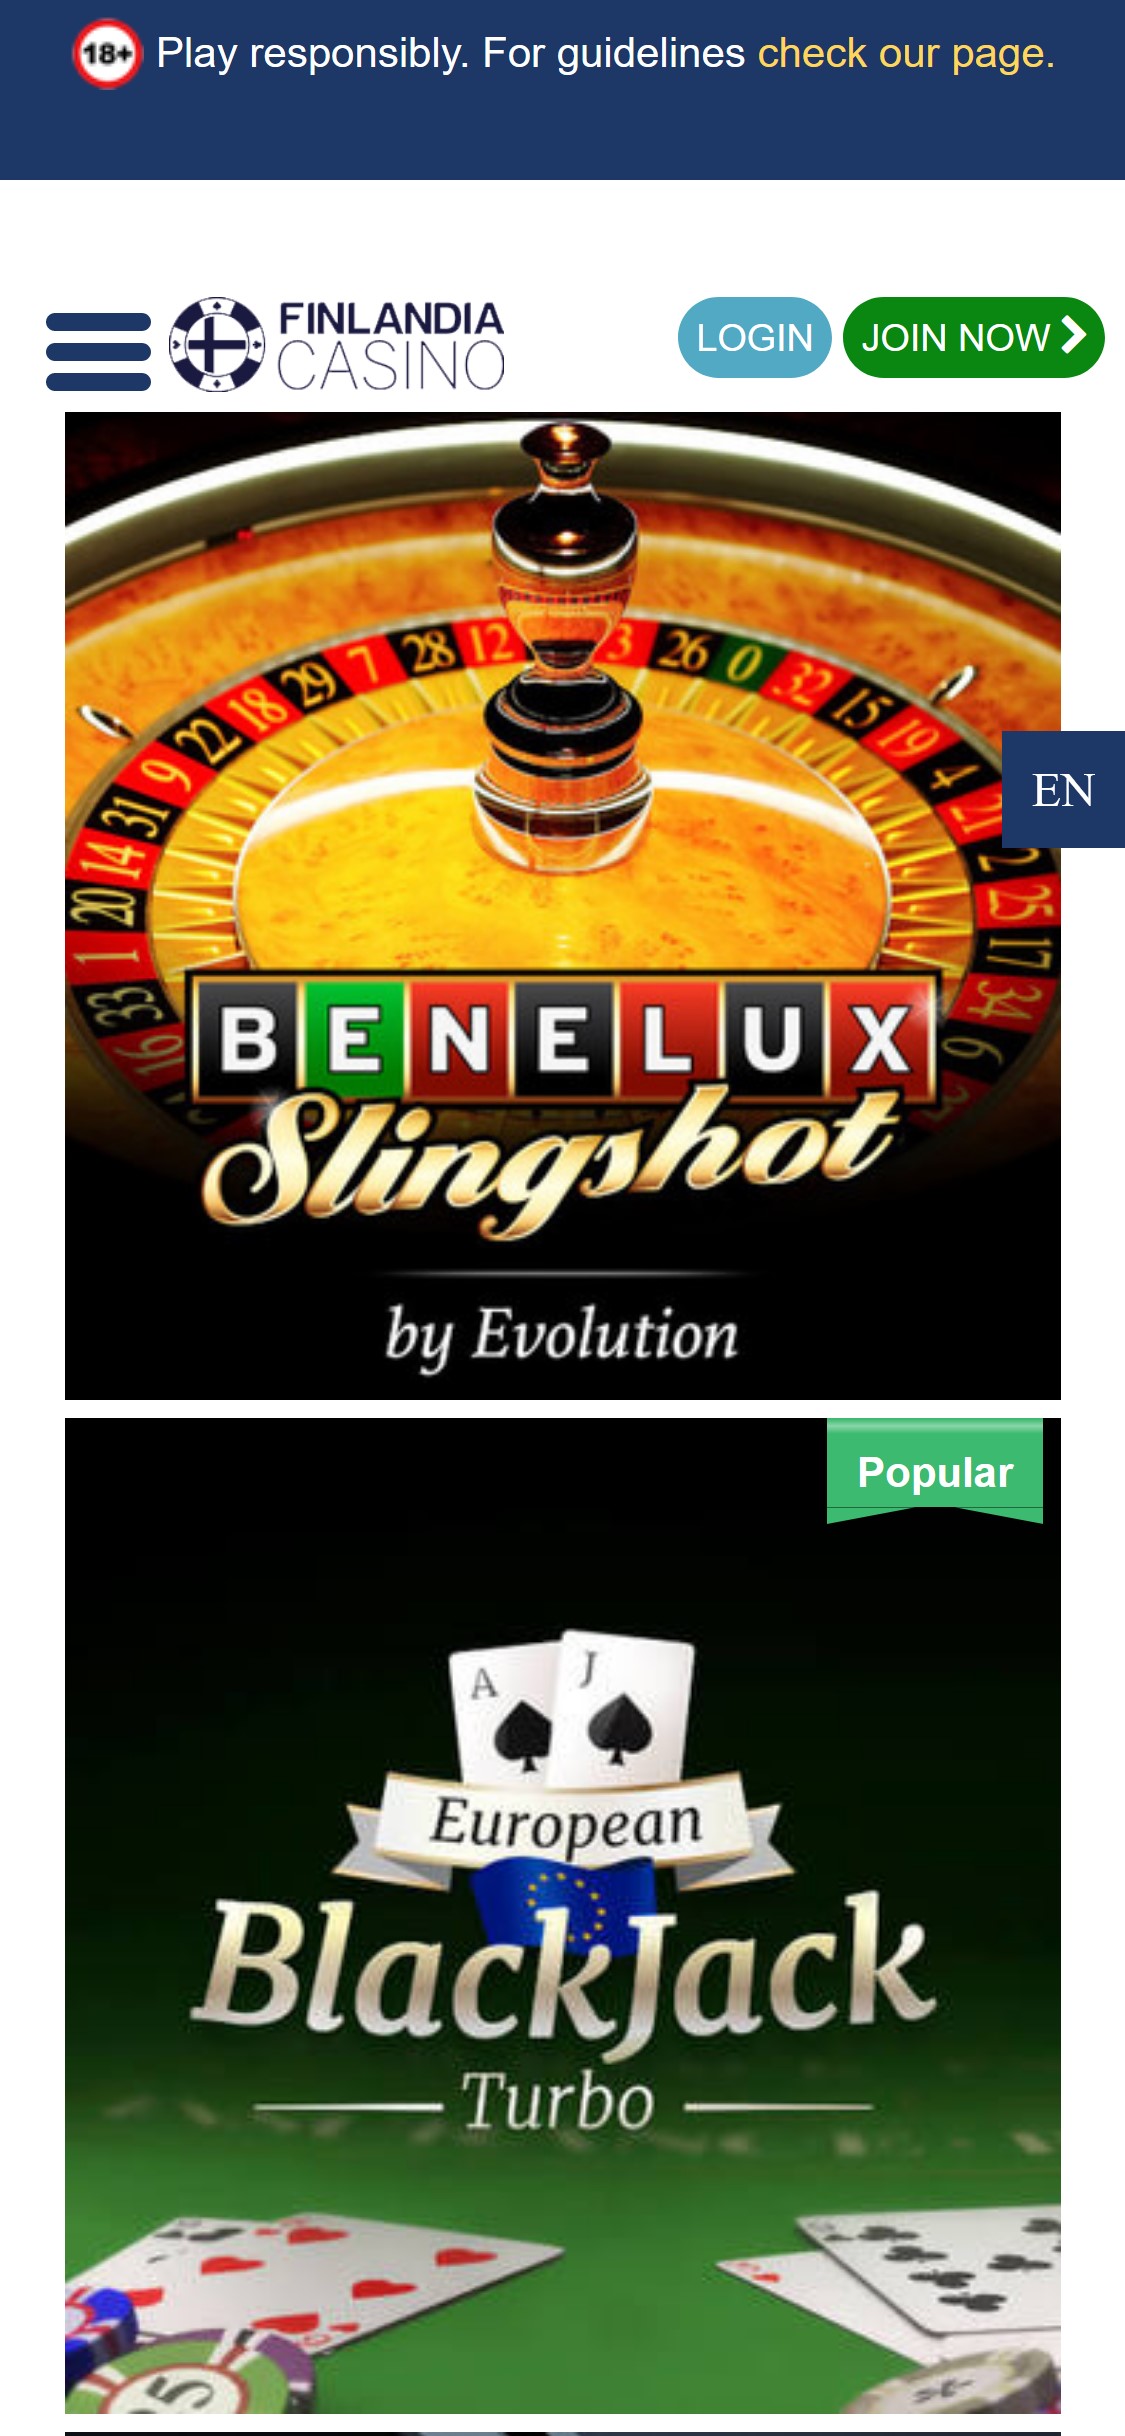 Finlandia Casino Mobile Live Dealer Games Review